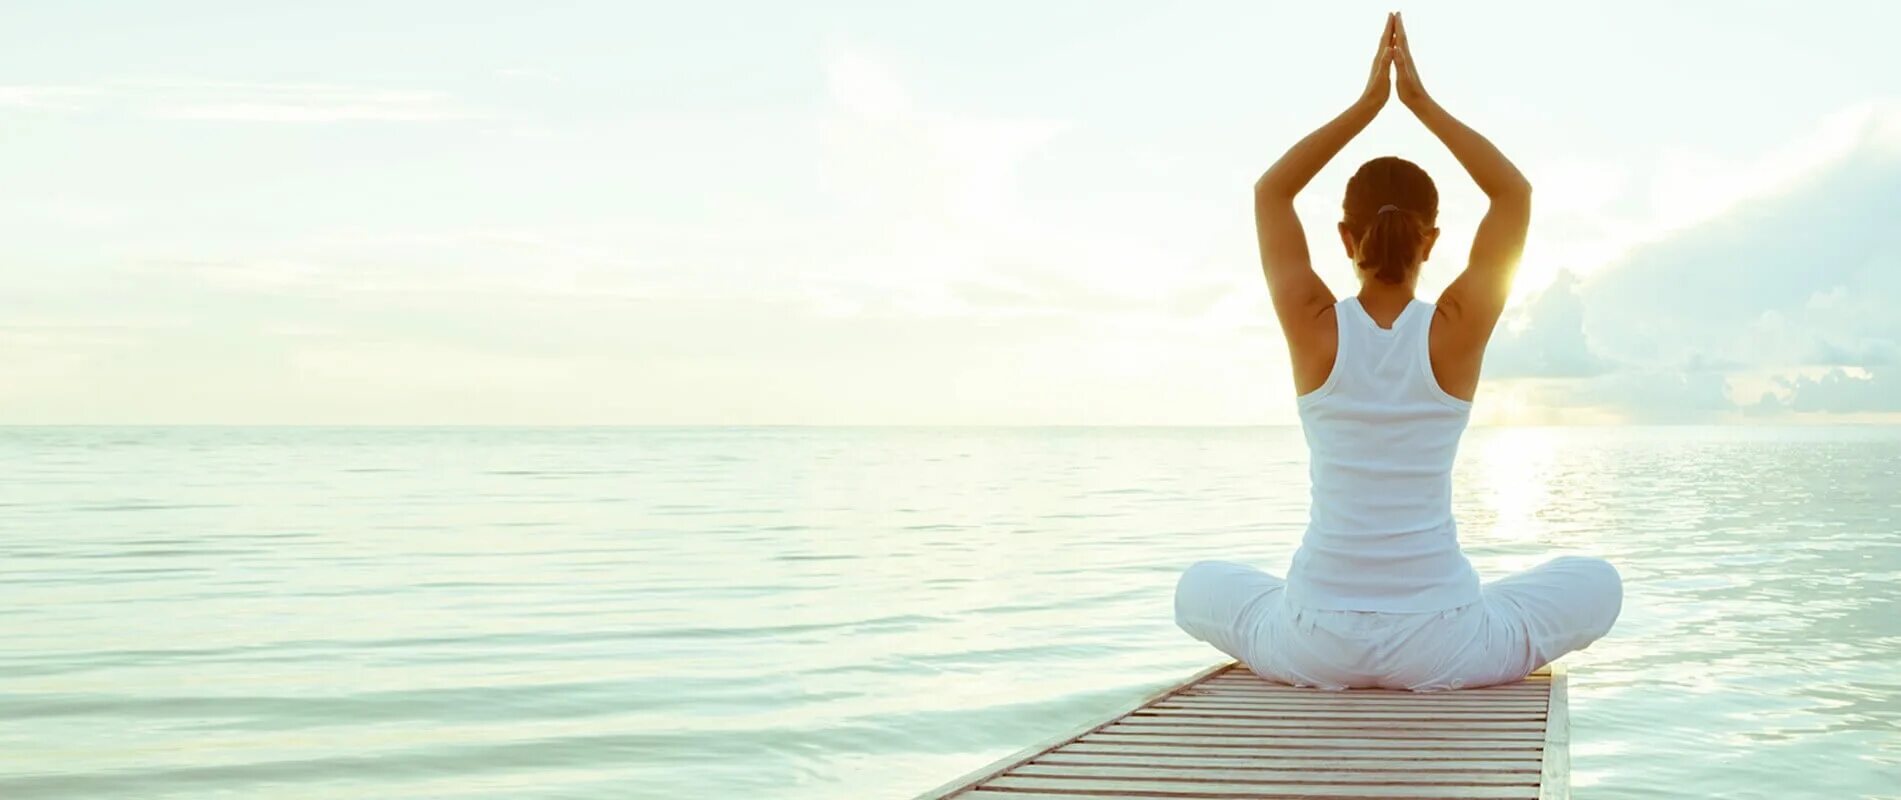 Утренняя медитация на день. Обложка для твиттера йога. Шаблоны для фейсбука йога. Кундалини йога картинки красивые. Йога картинки горизонтальные.